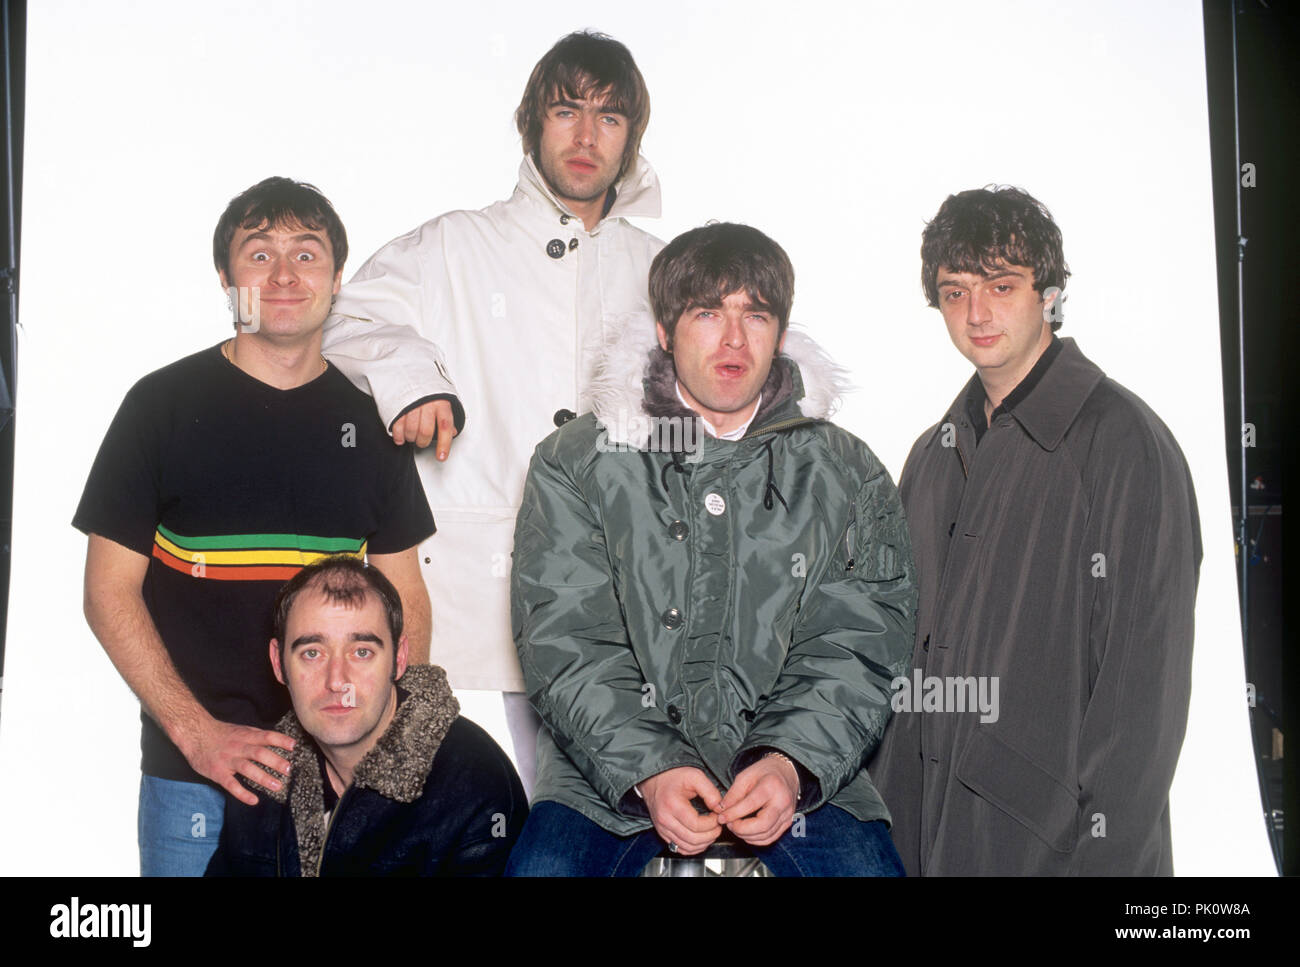 Oasis (L-R): Alan White, Paul "Bonehead" Arthurs, Liam Gallagher, Noel Gallagher, Paul McGuigan "Guigsy" am 27.03.1996 in München. | Verwendung weltweit Stockfoto